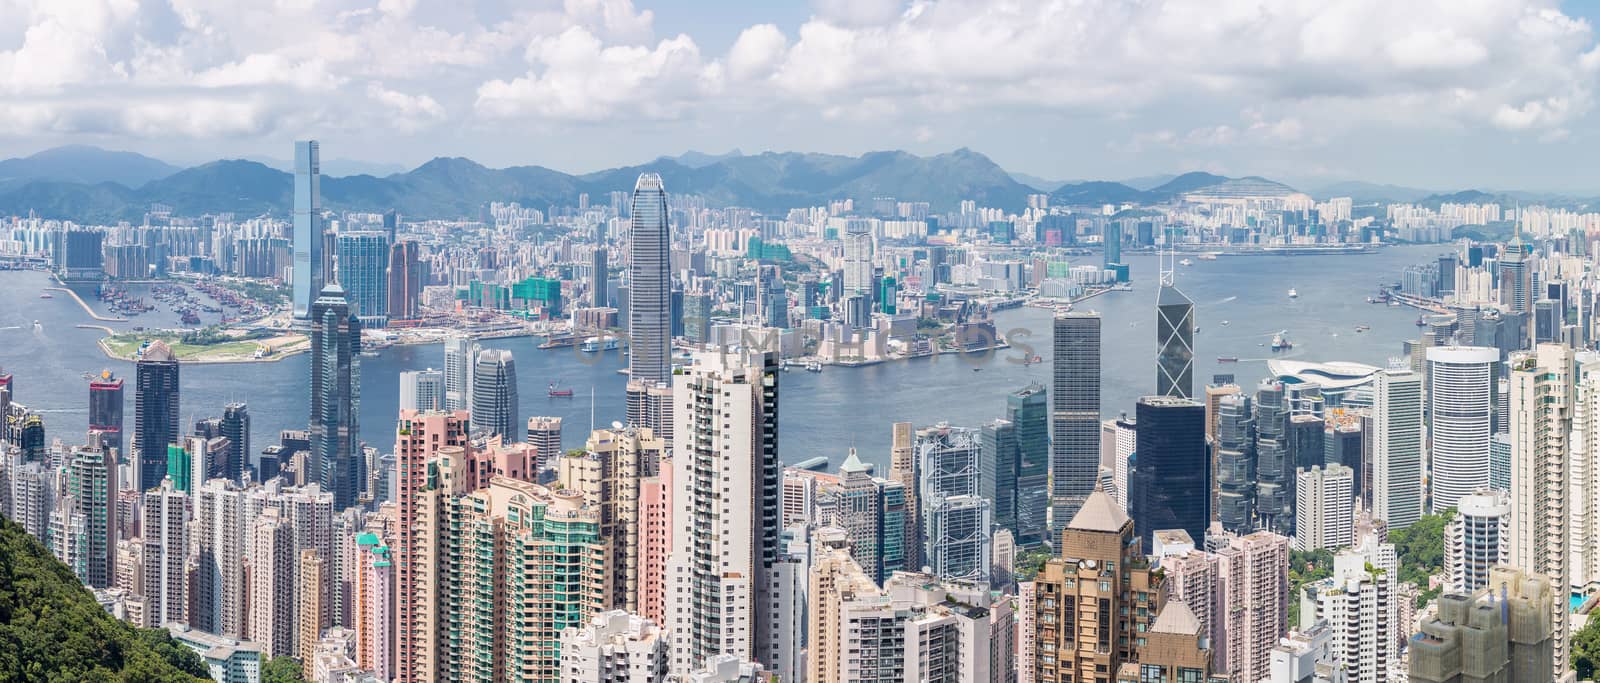 Hong Kong Skyline by vichie81